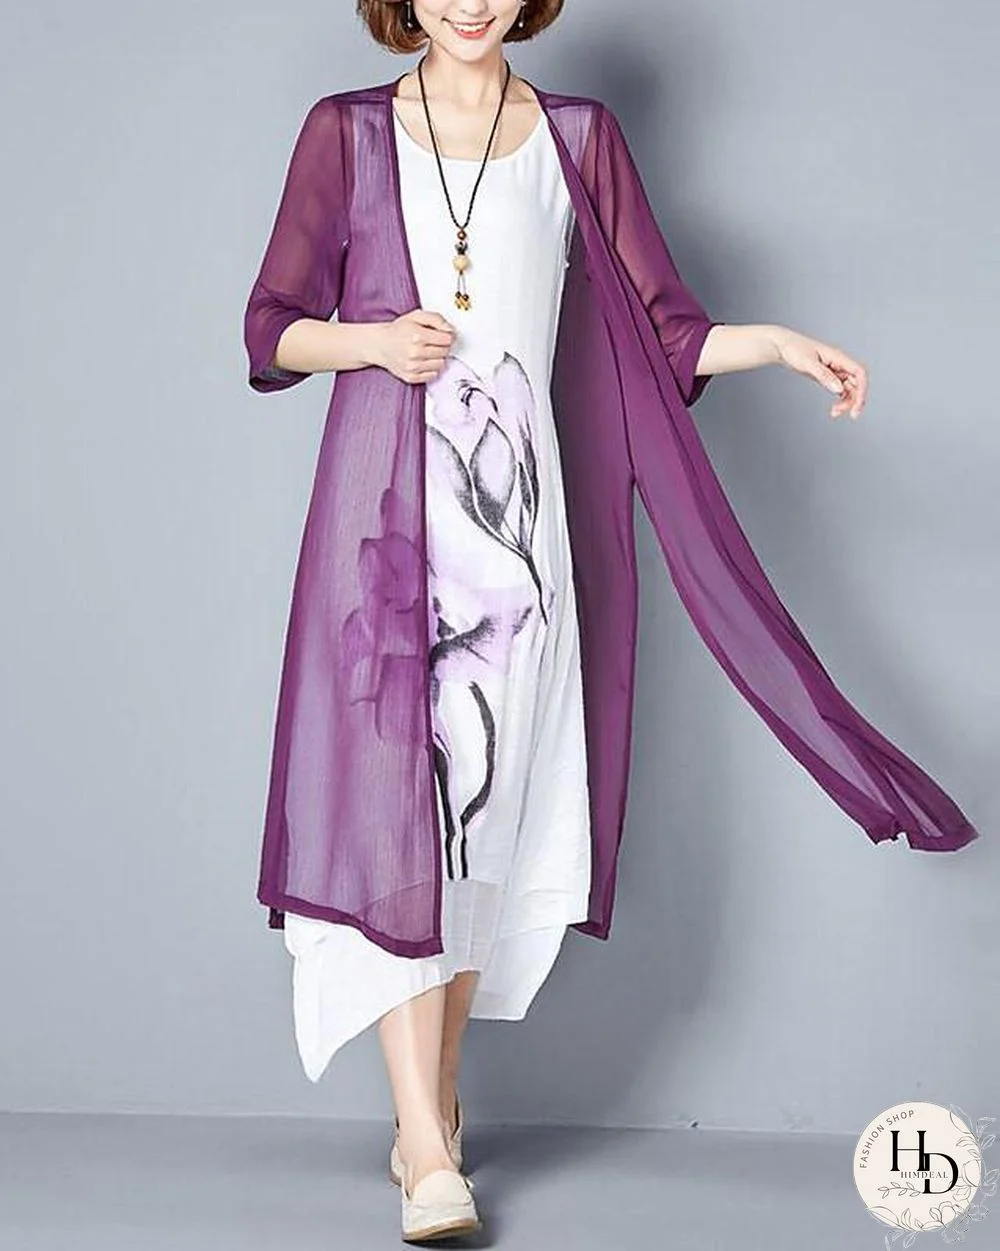 Women's Two Piece Dress Maxi long Dress Floral Print Summer Plus Size Hot Chinoiserie Cotton Loose Floral Purple Blushing Pink Green Gray M L XL XXL 3XL 4XL 5XL